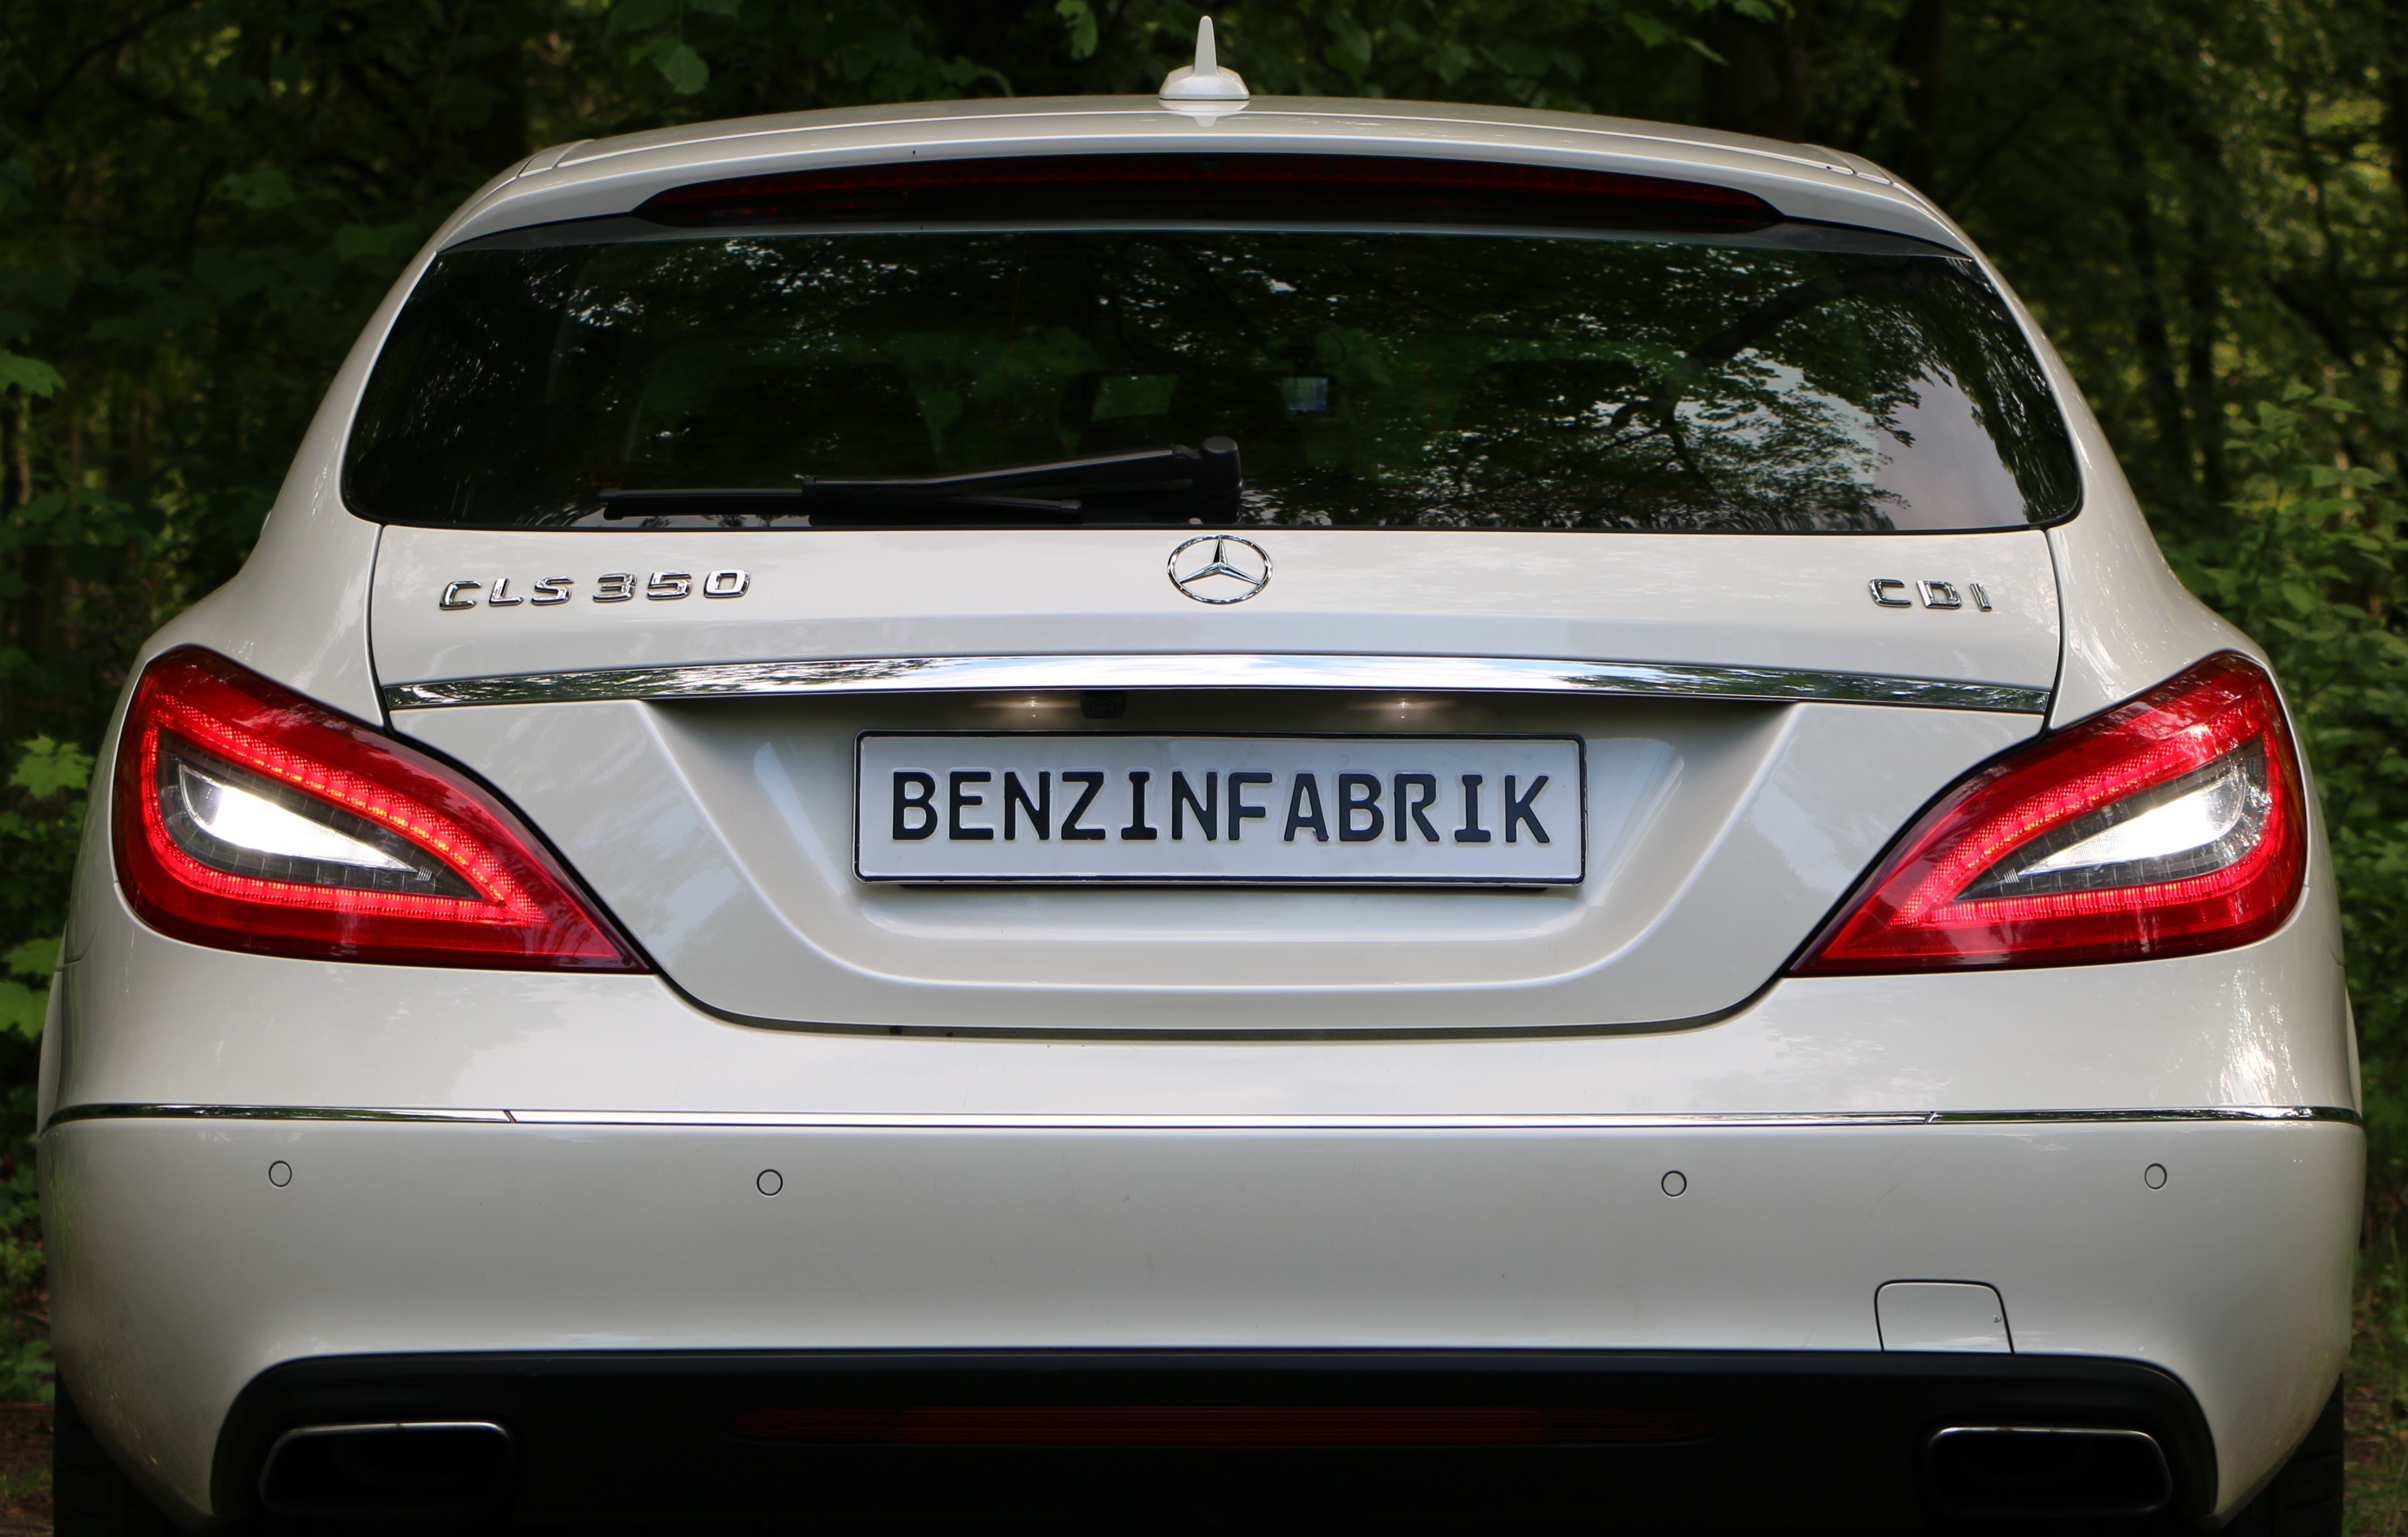 10x5 W CREE® LED Rückfahrlicht Mercedes CLS C218, weiss, LED Rückfahrlicht  Mercedes, LED Rückfahrlicht